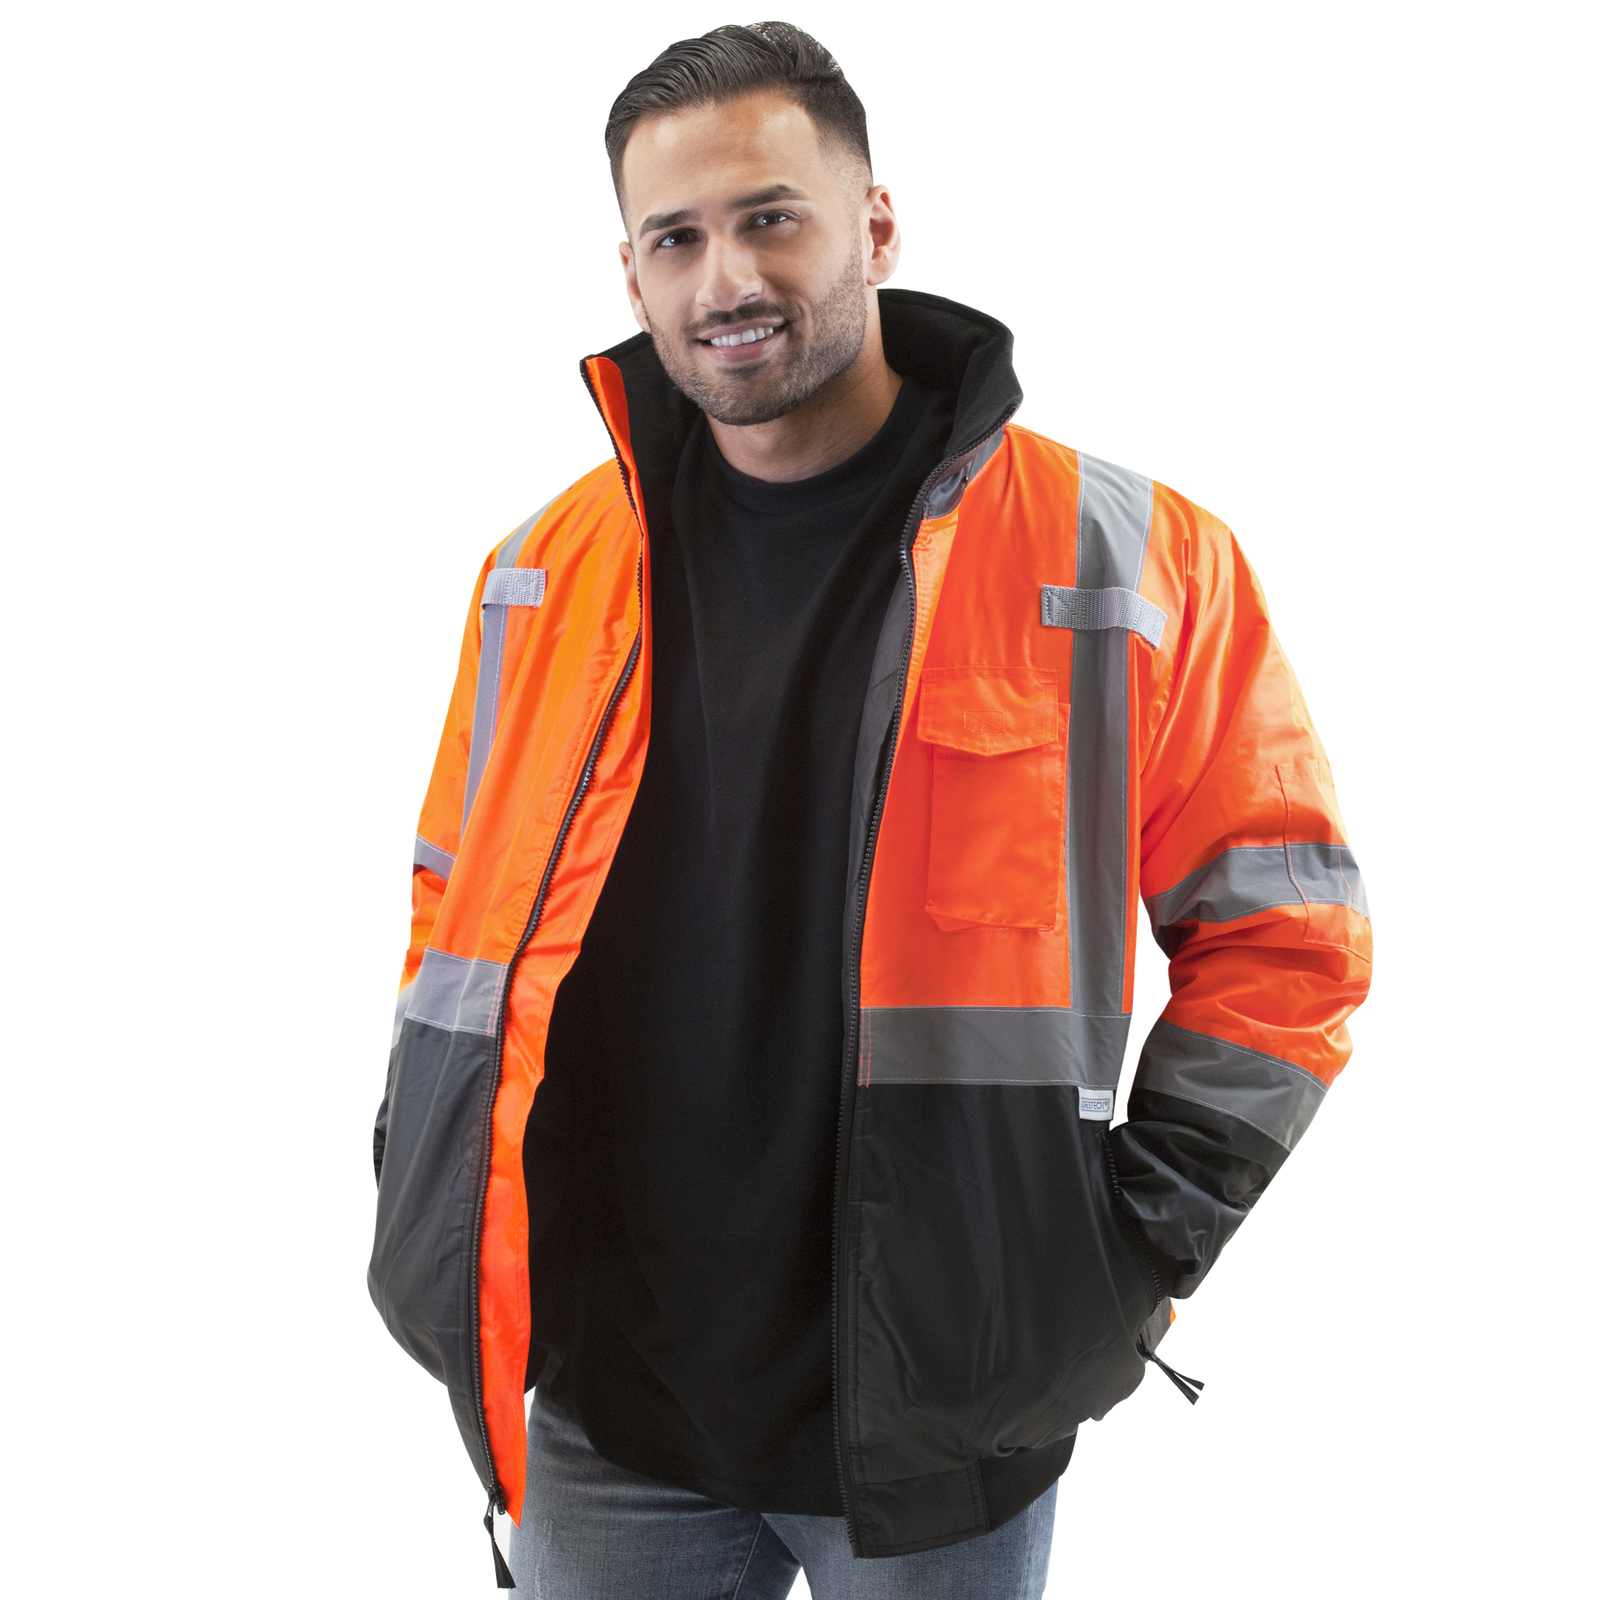 Man wearing the hi vis orange and black JORESTECH ANSI compliant winter safety jacket